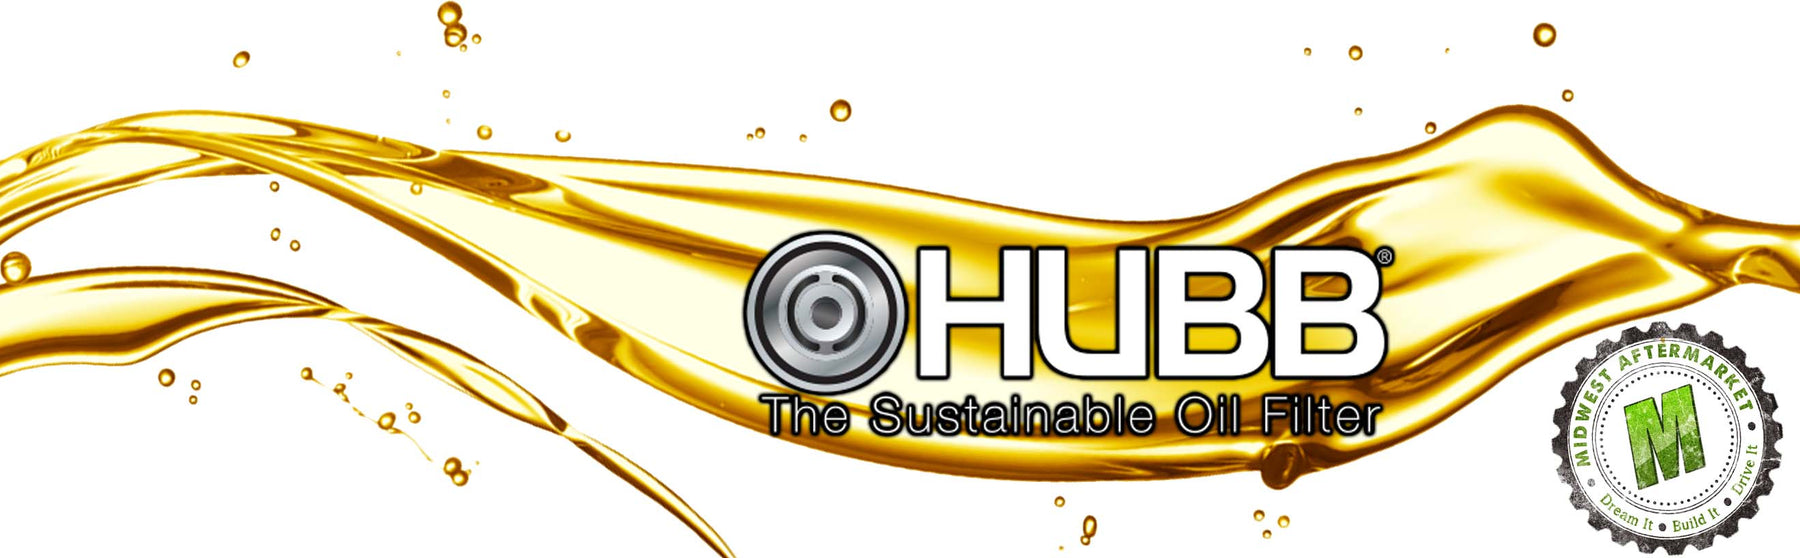 Hubb Filters: The Next Gen Oil Filter